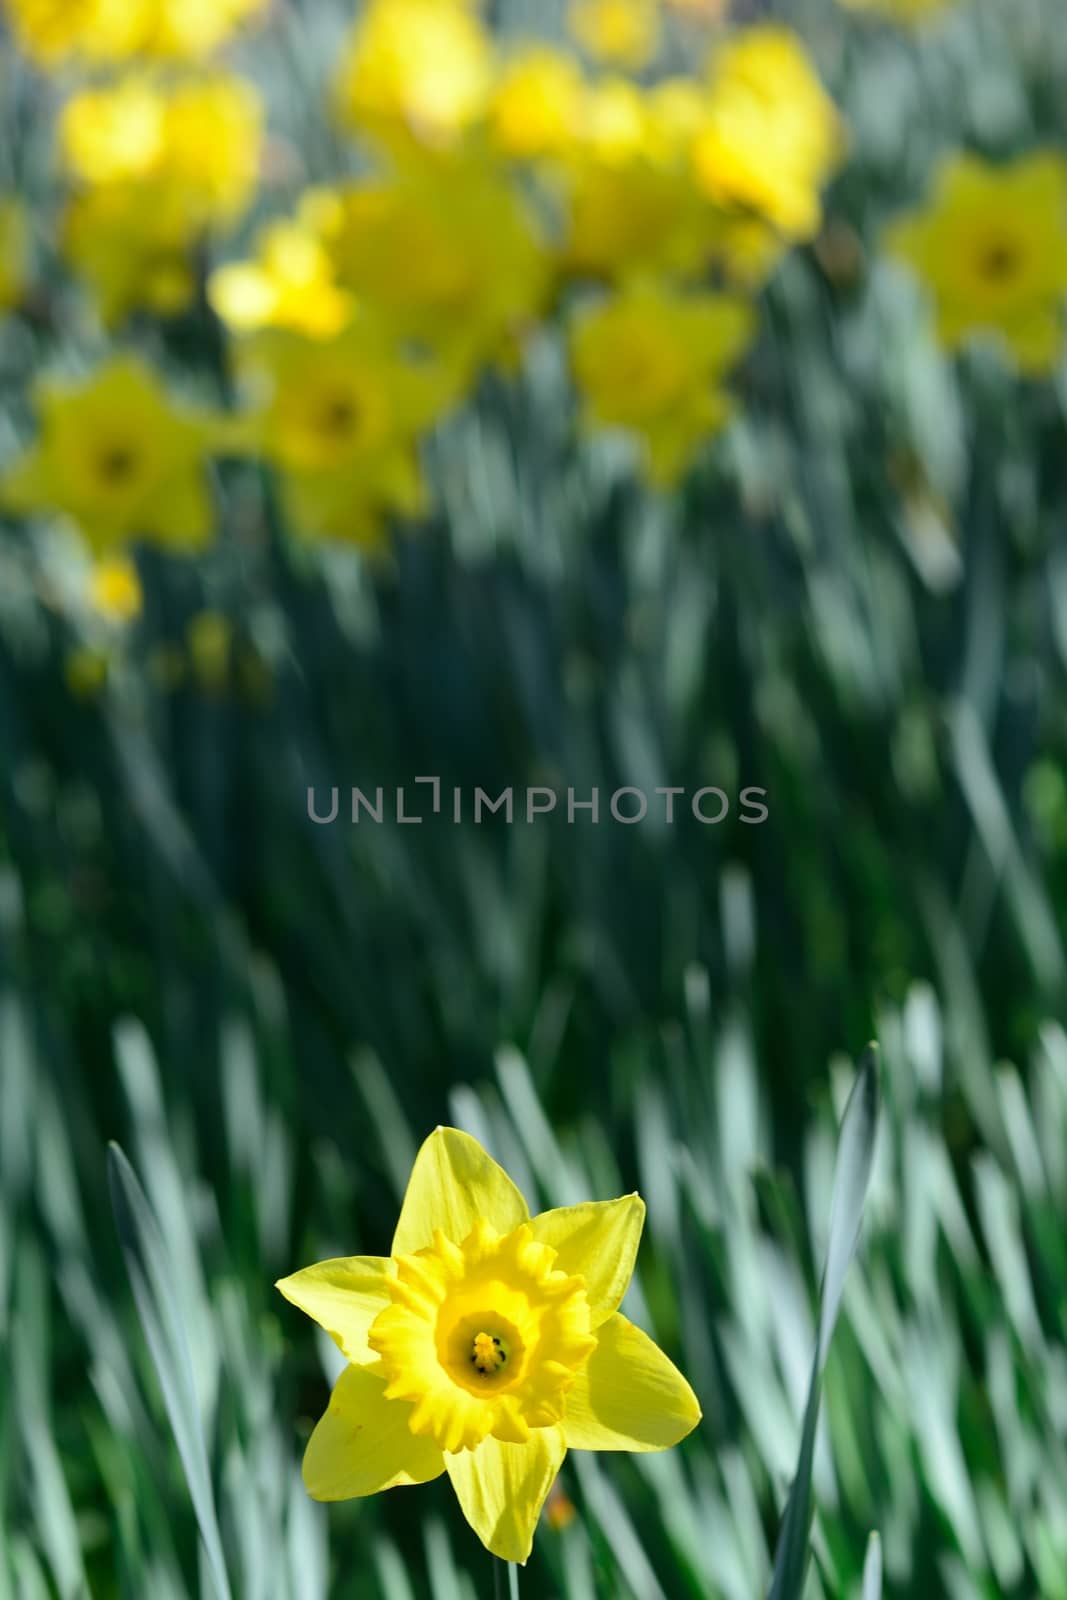 Daffodil alone by pauws99